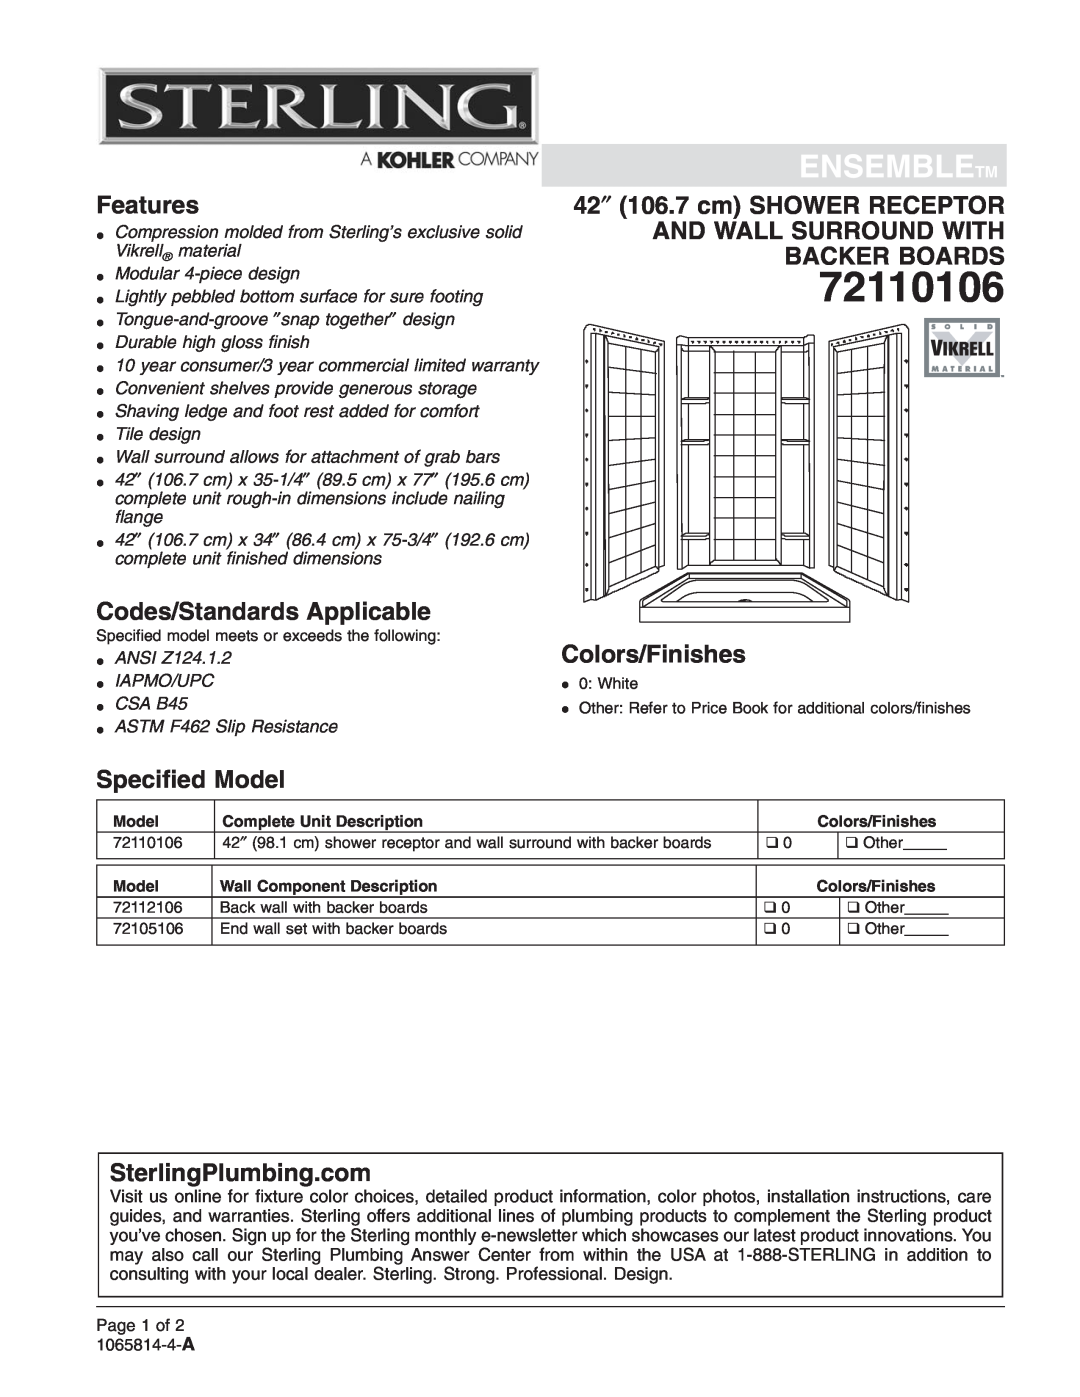 Sterling Plumbing 72110106 warranty Ensembletm, Features, Codes/Standards Applicable, 42″ 106.7 cm SHOWER RECEPTOR 